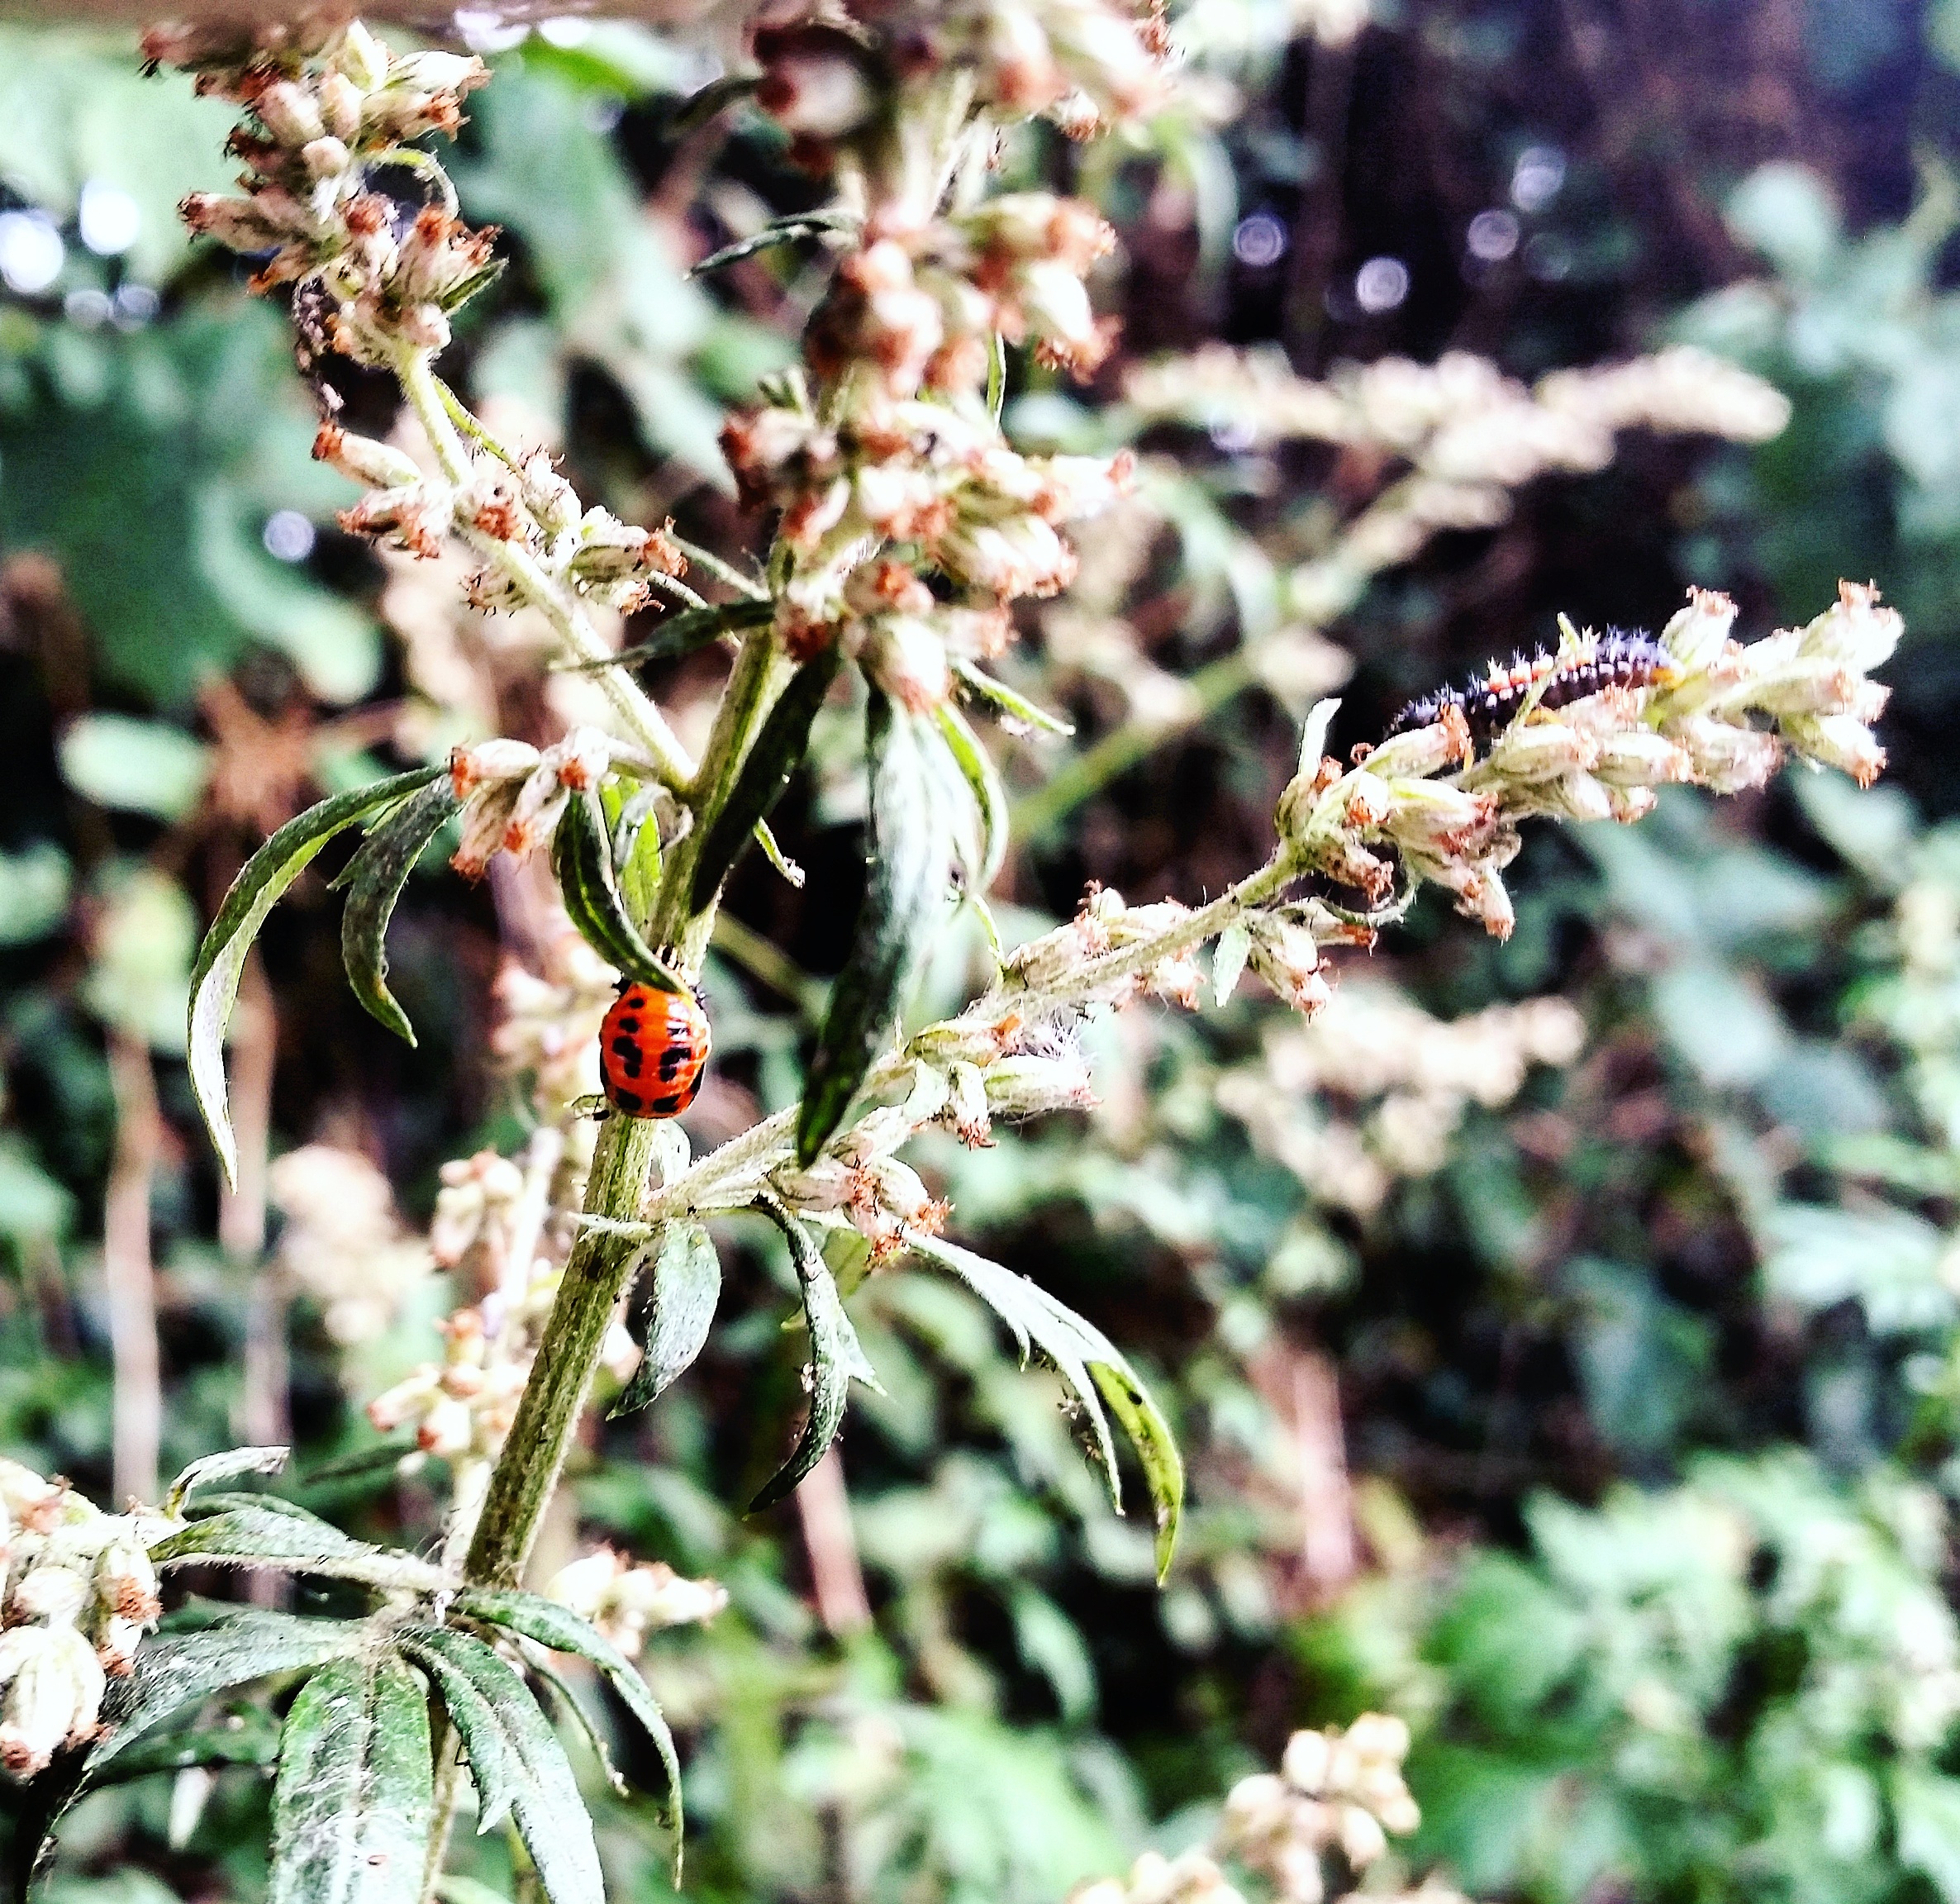 Ladybird lavae and pupa